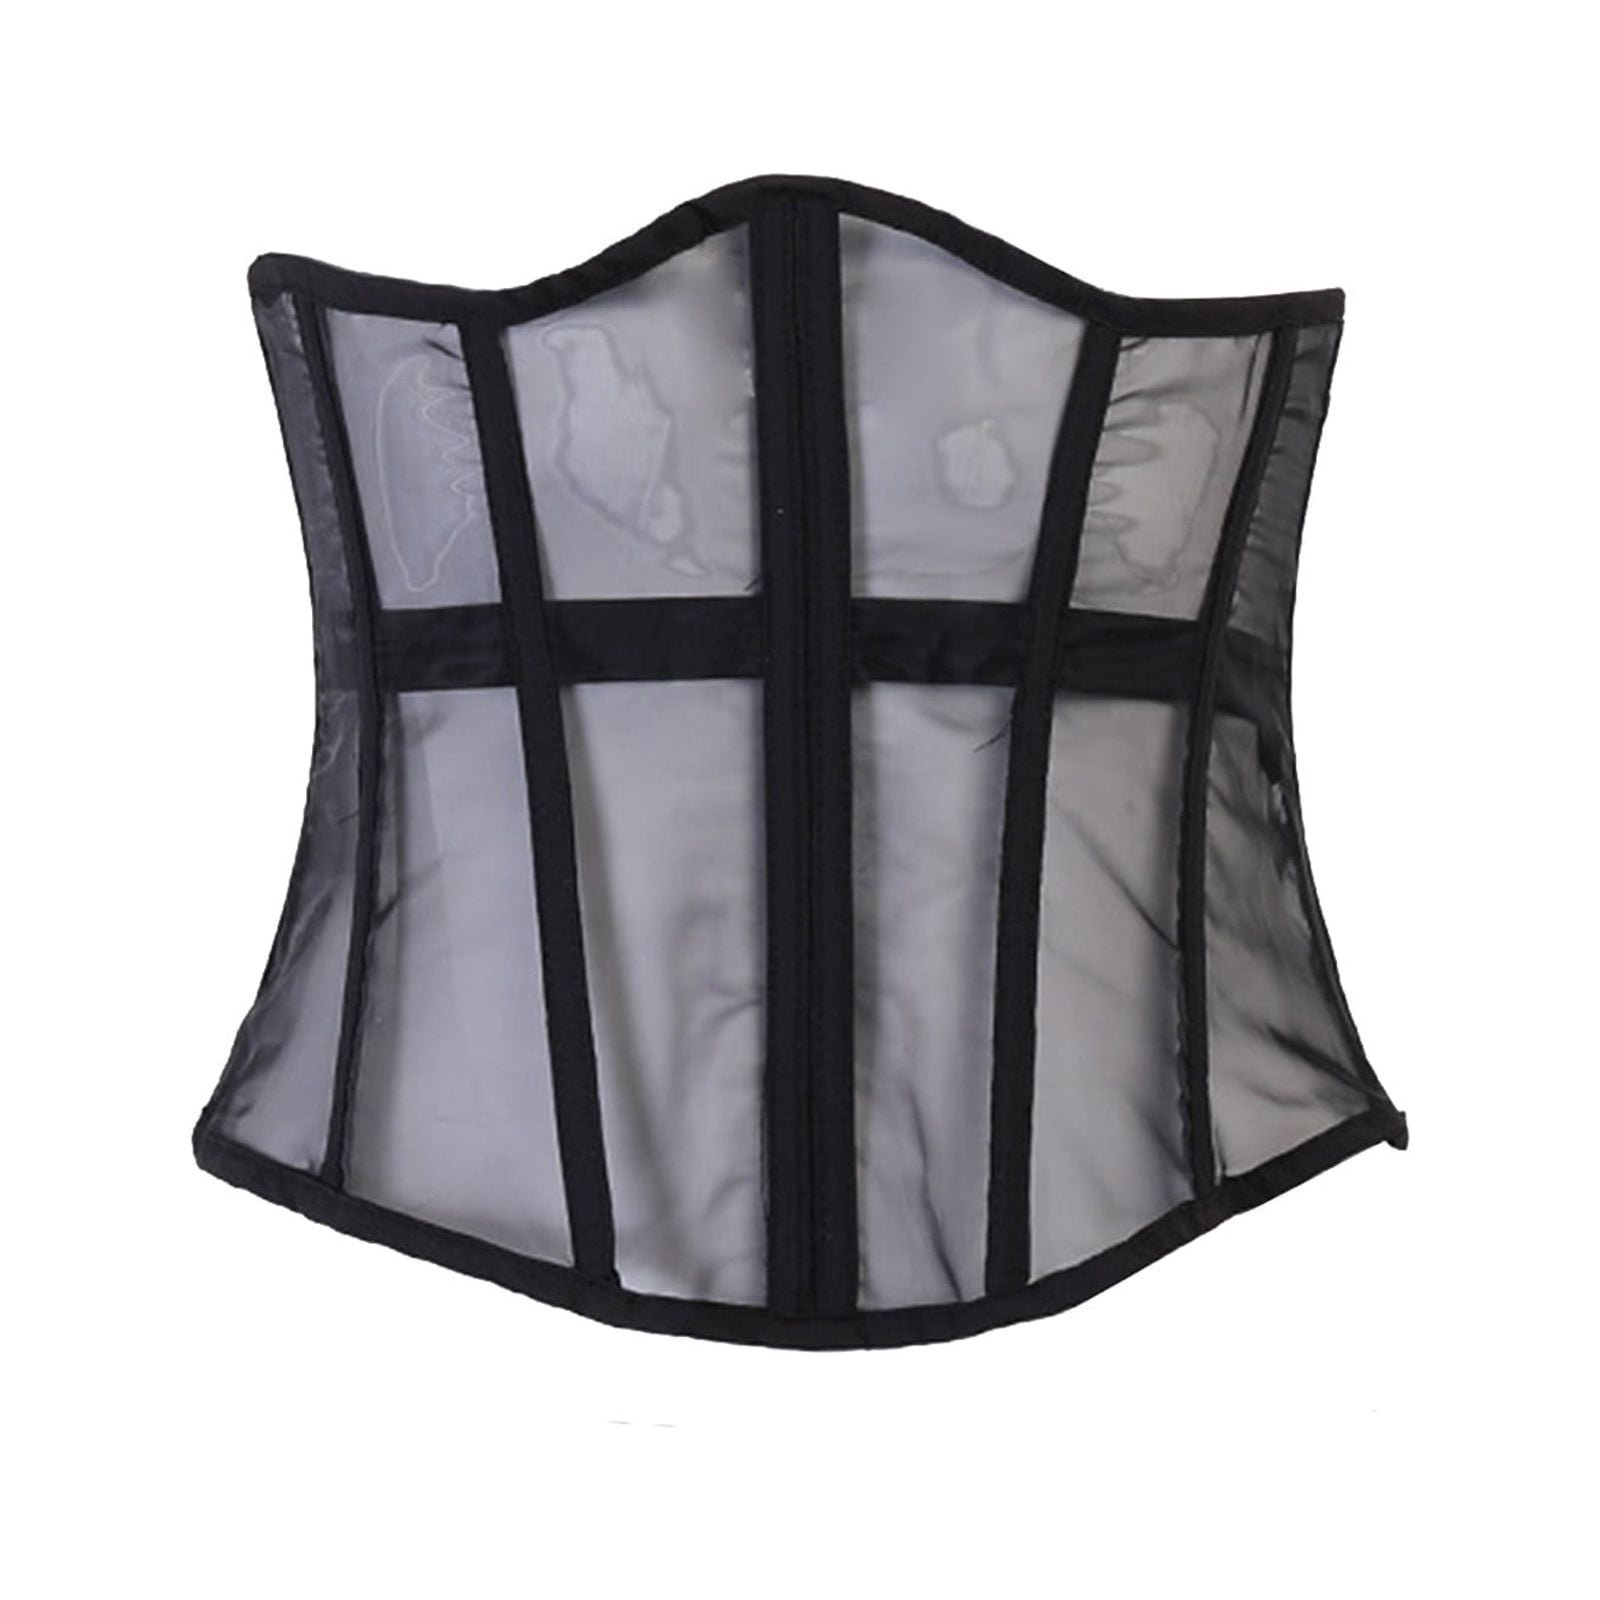 NRUDPQV lace corset belt waist corset top women mesh lace up boned